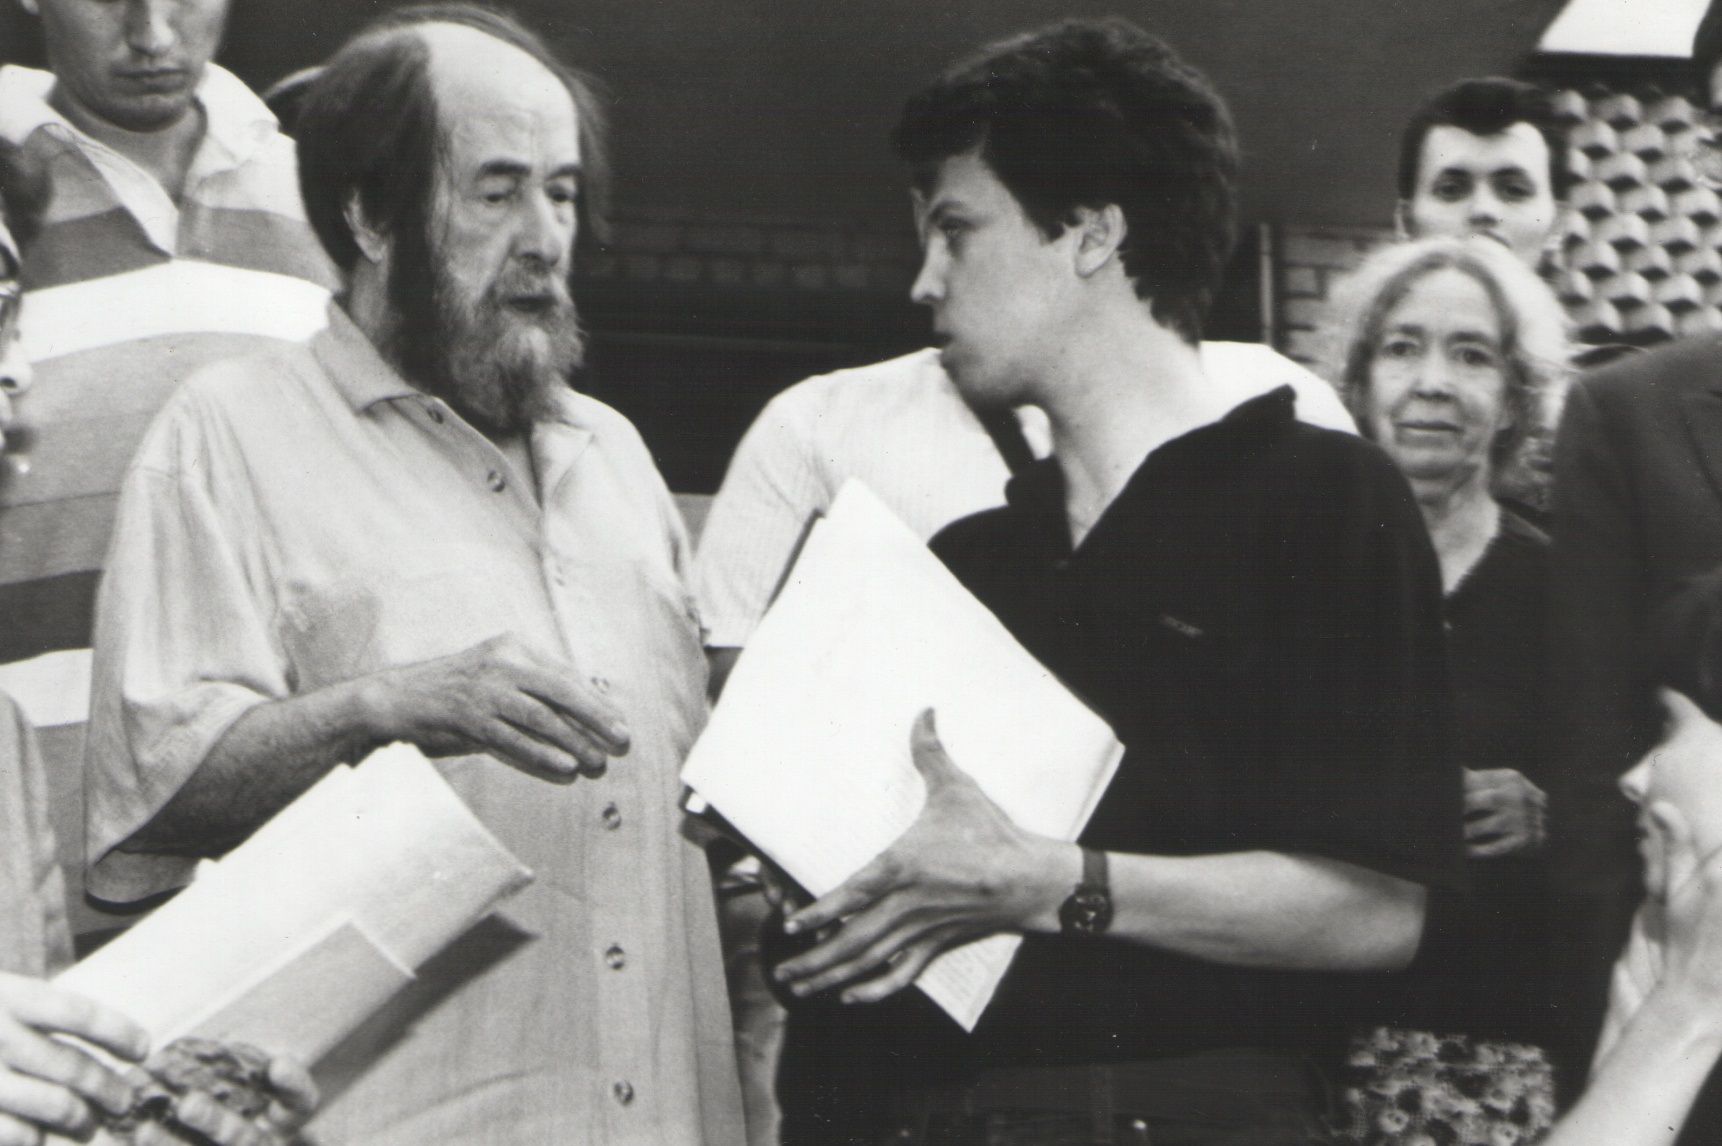  Александр Солженицын и Михаил Матвеев. 8 сентября 1995 г., Самара. Фото: ru.wikipedia.org